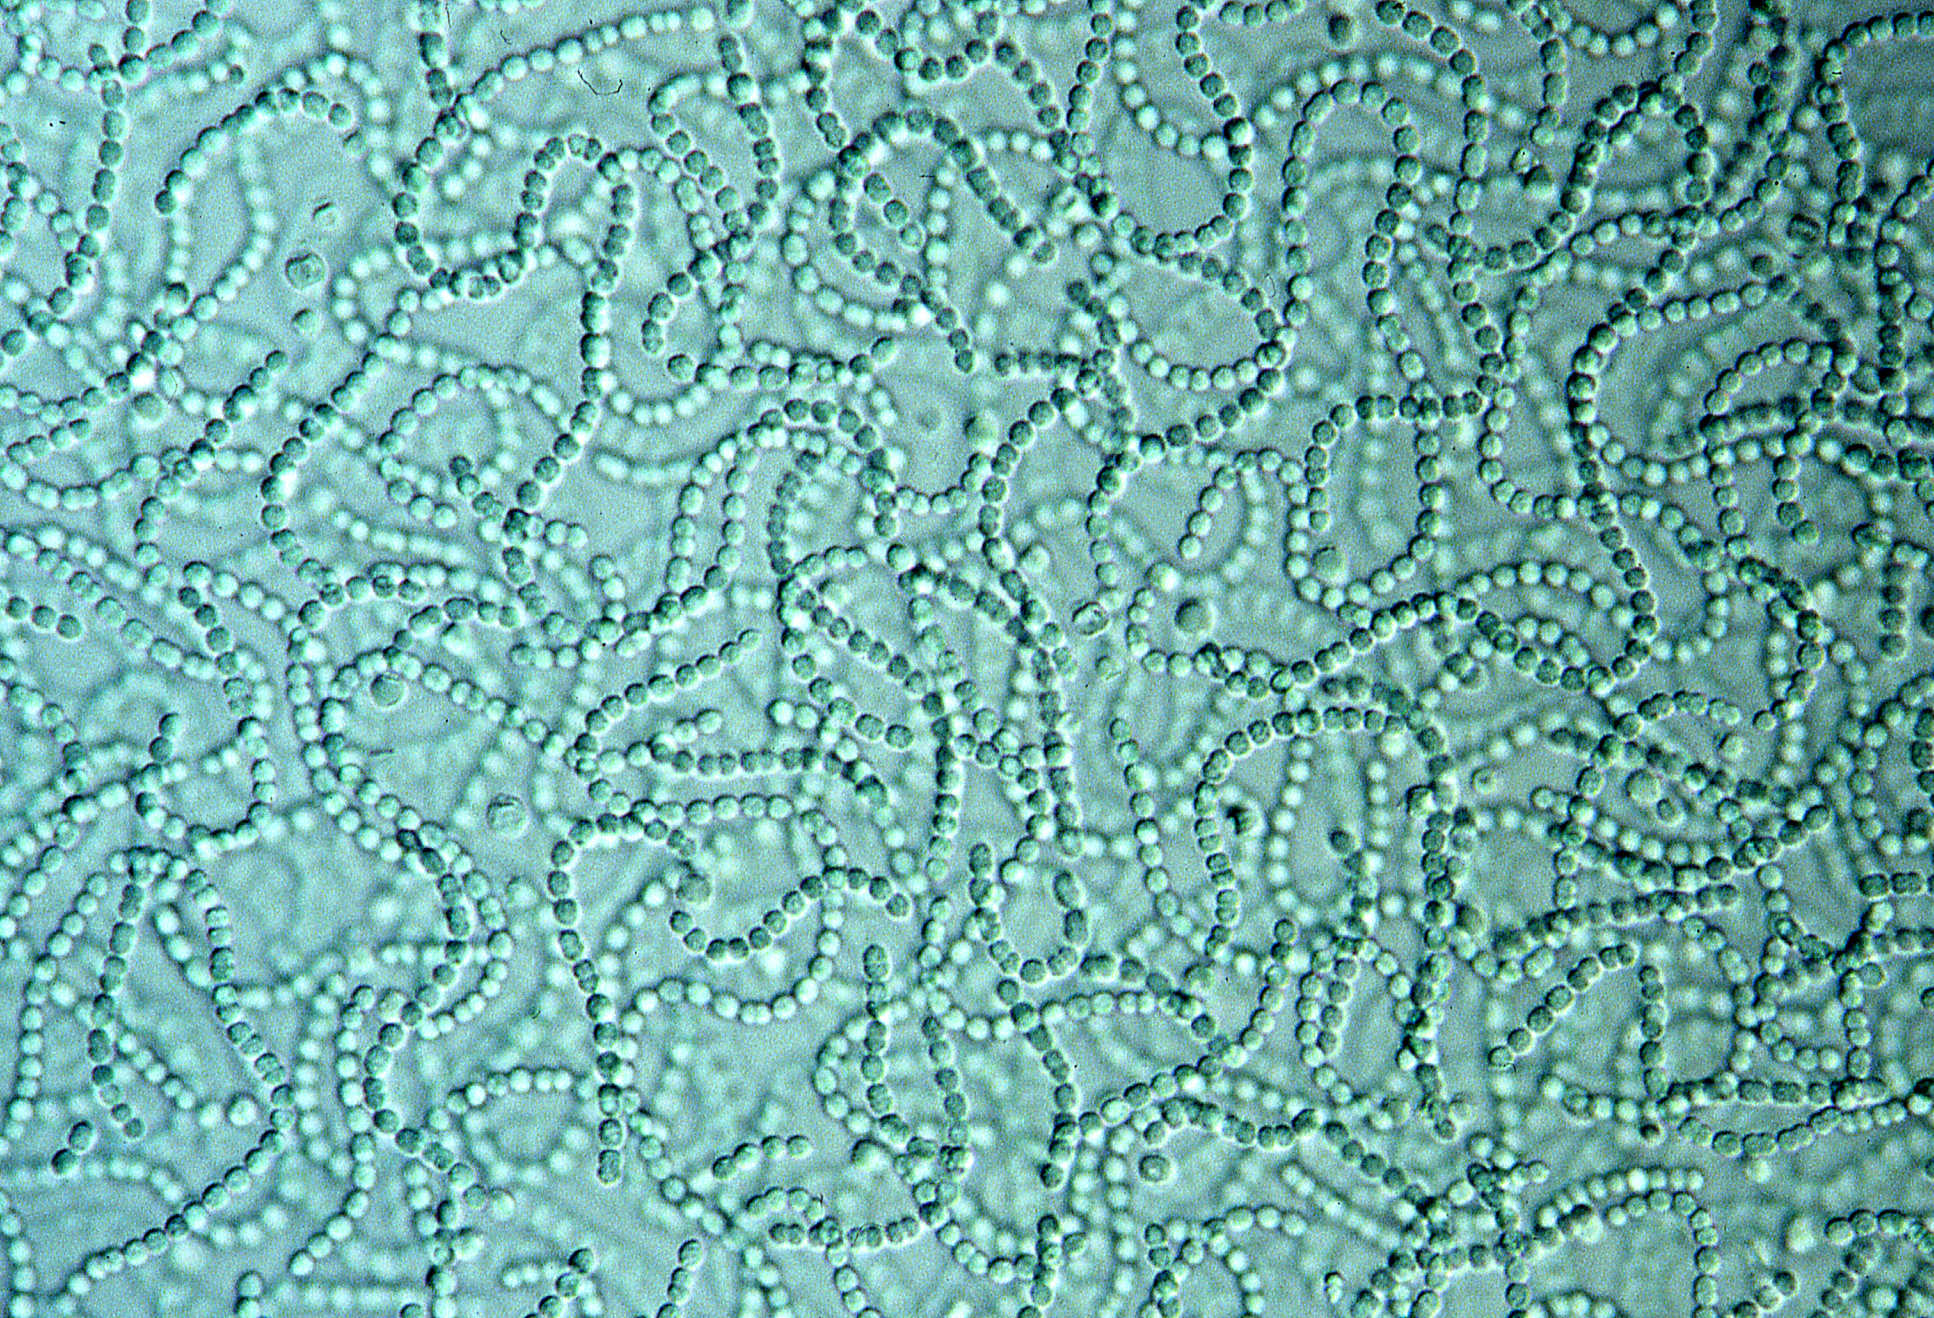 Cyanobacteria up close